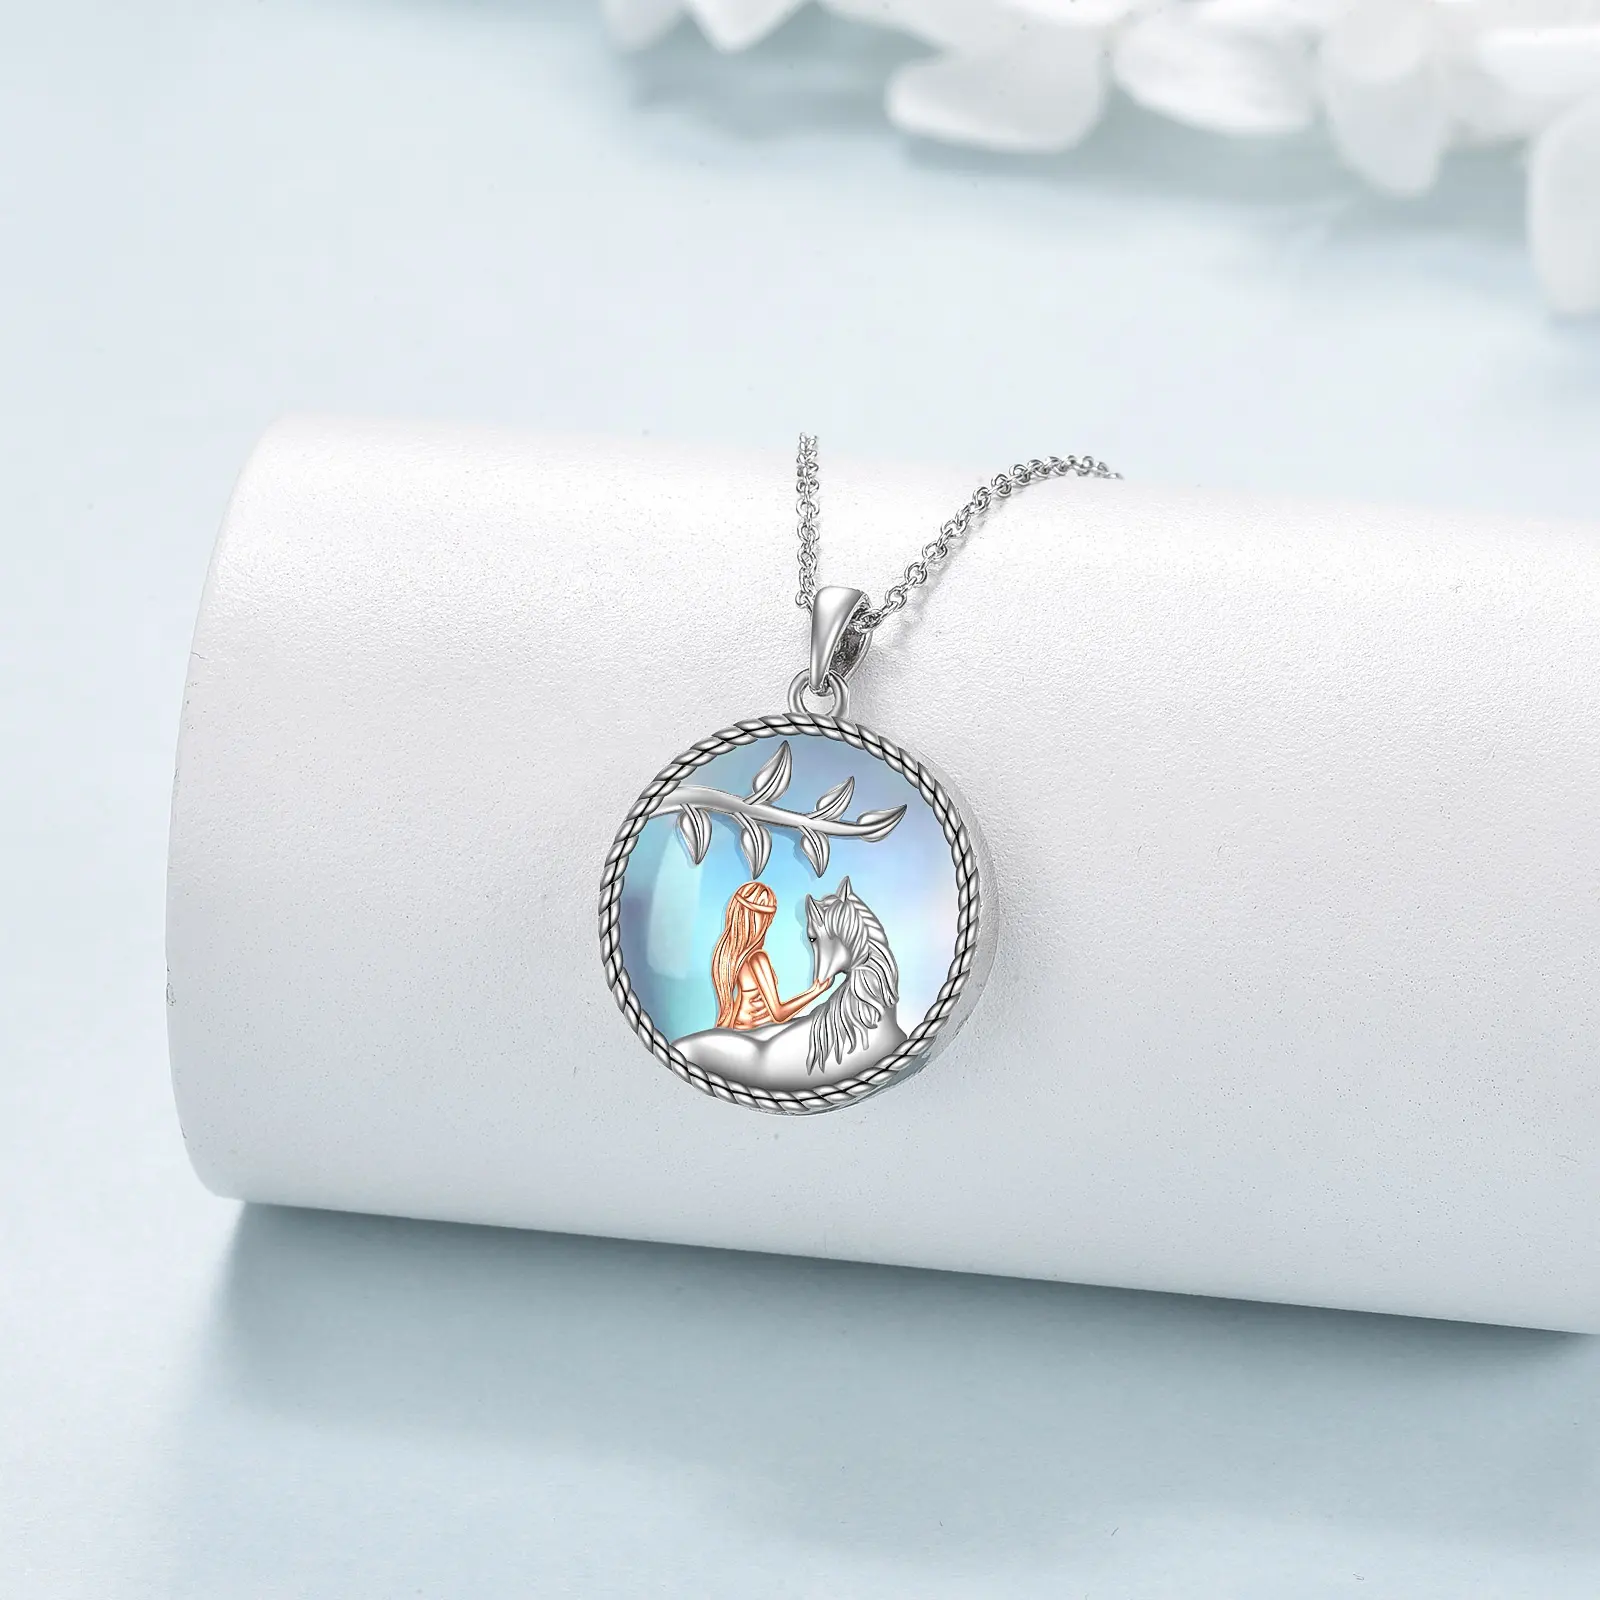 Luxo bonito 925 Sterling Silver Horse e meninas Moonstone Pendant Necklace Jewelry Gift